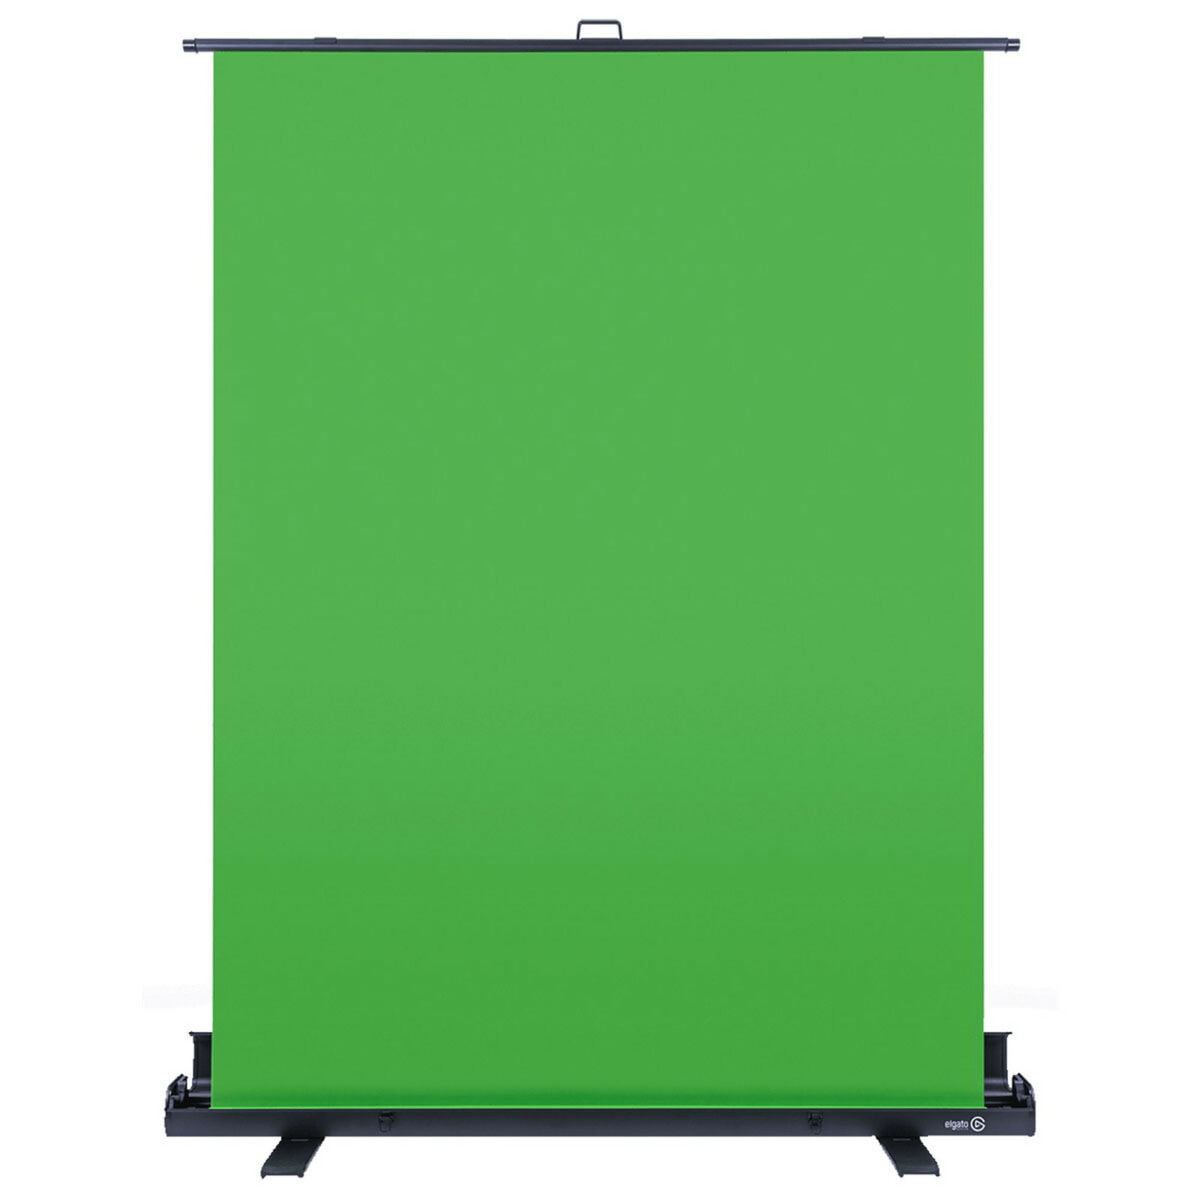 CORSAIR Elgato Green Screen – Collapsible Chroma Key Panel